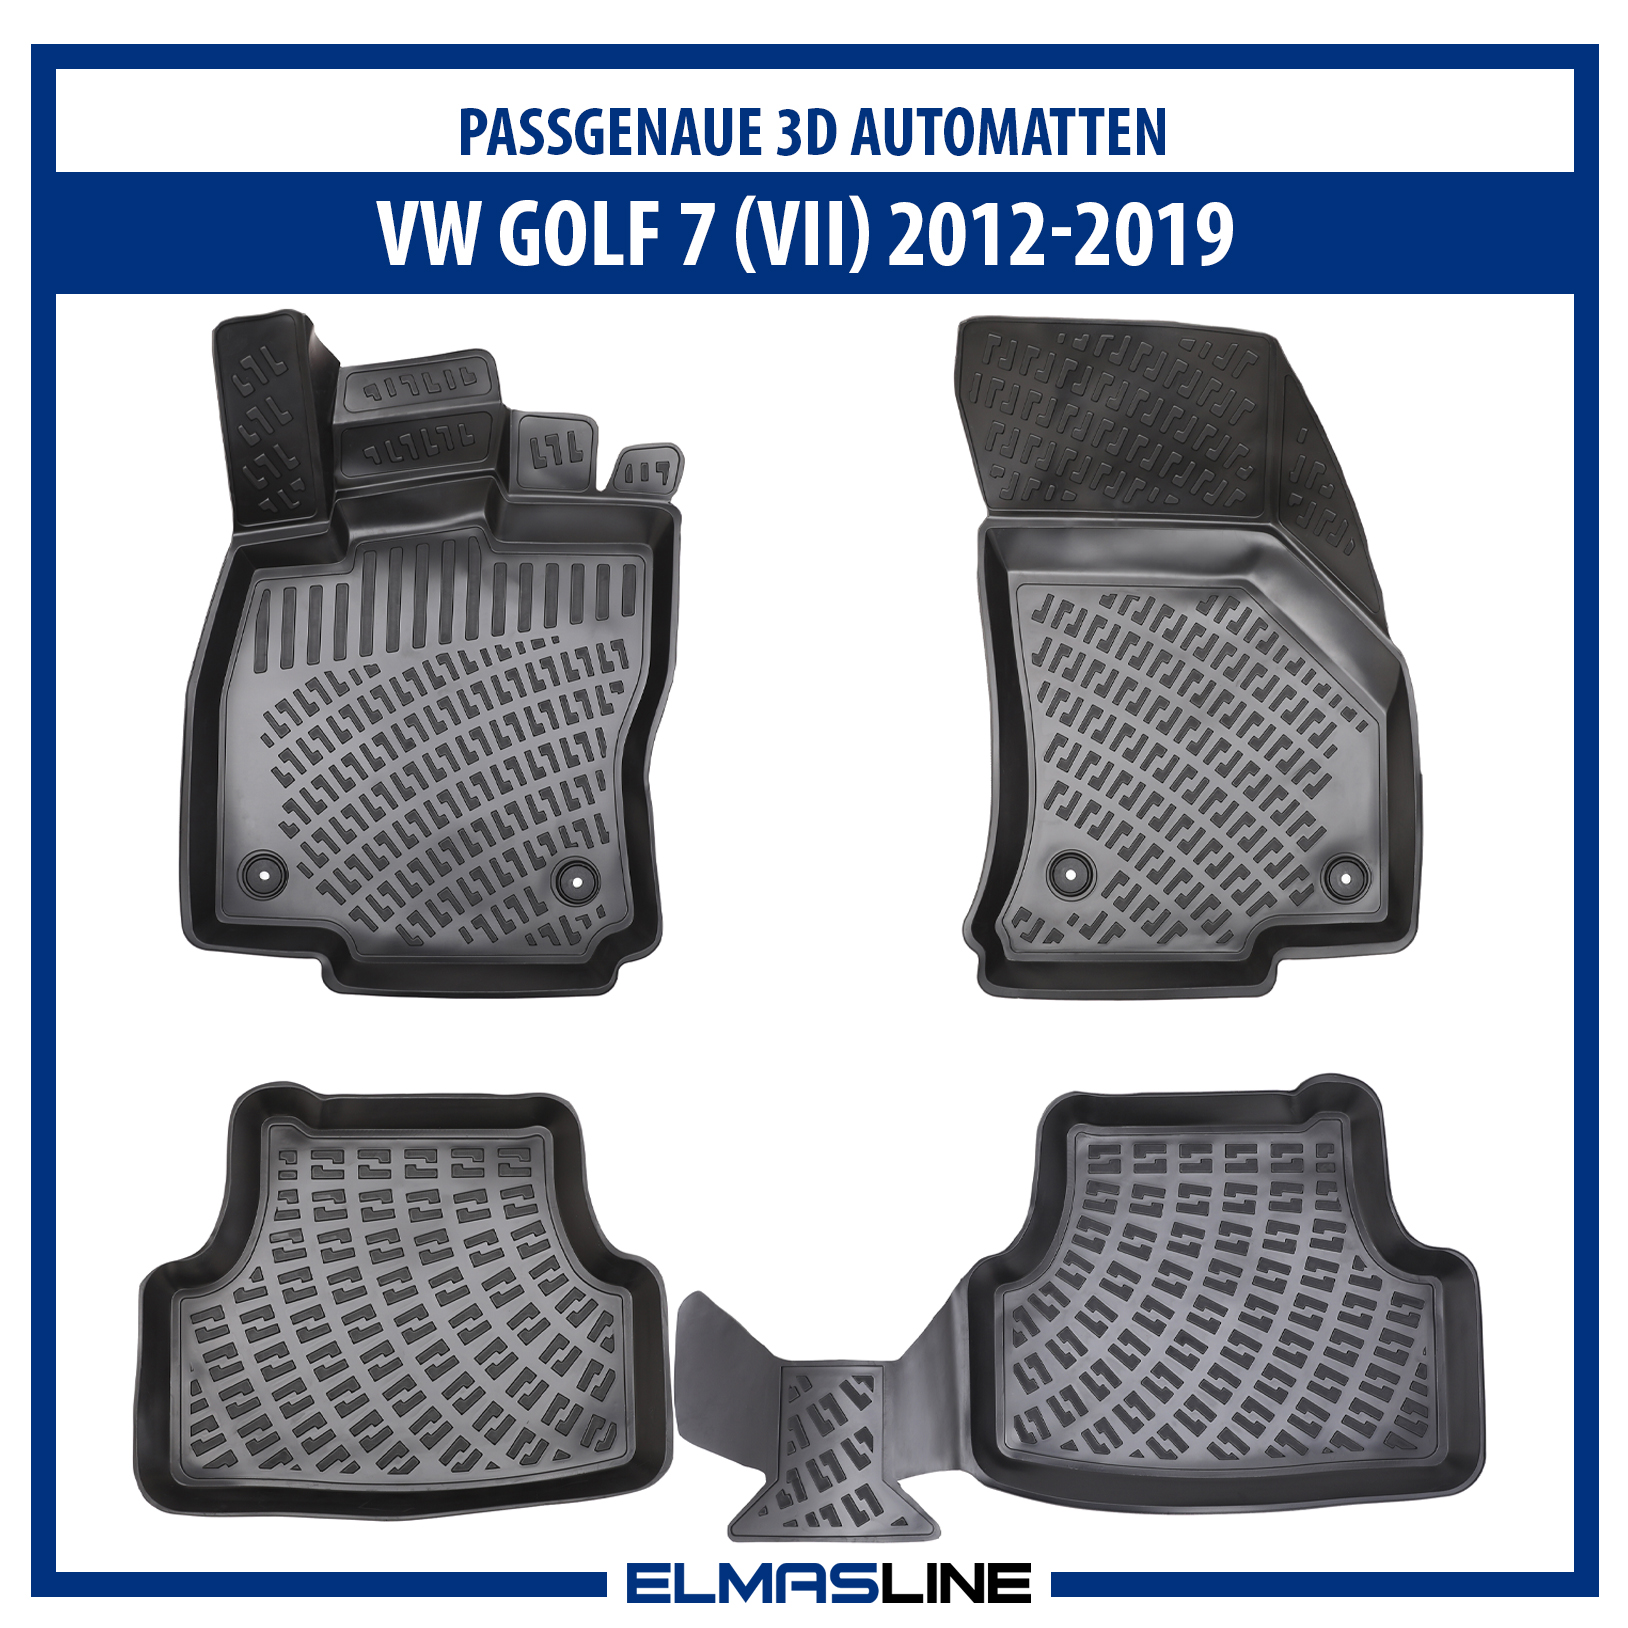 VW Golf 7 & Golf 7 Variant 2012-2019 passgenaue Auto Gummimatten